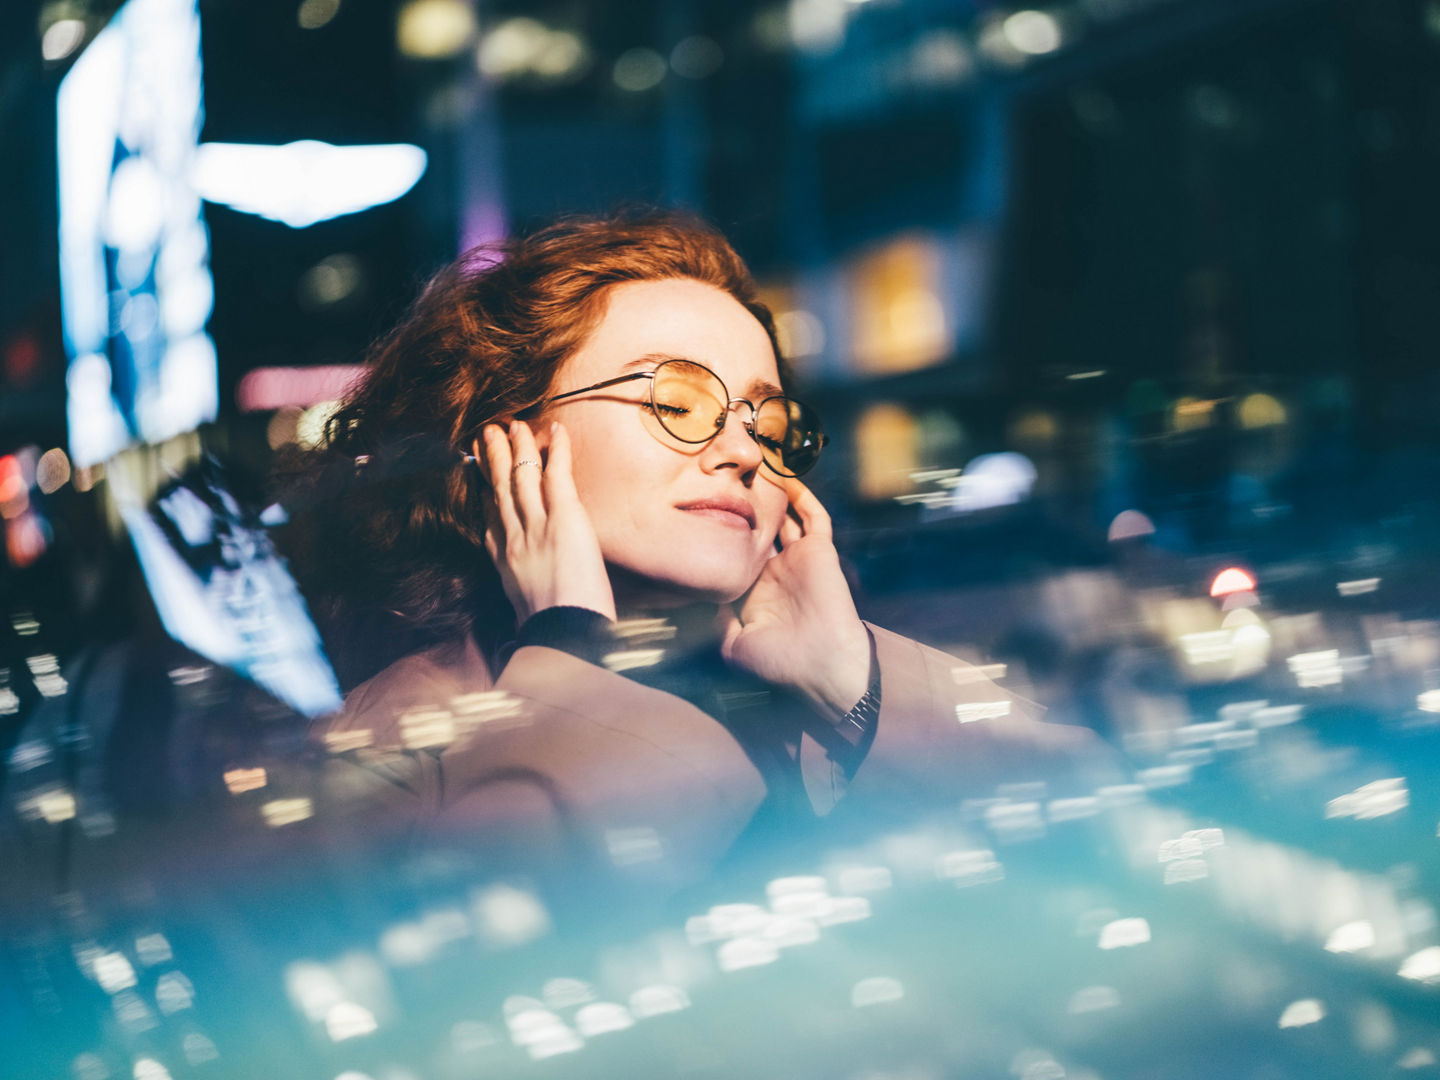 Woman enjoying nightlife and listening music in earphones at neon city illumination